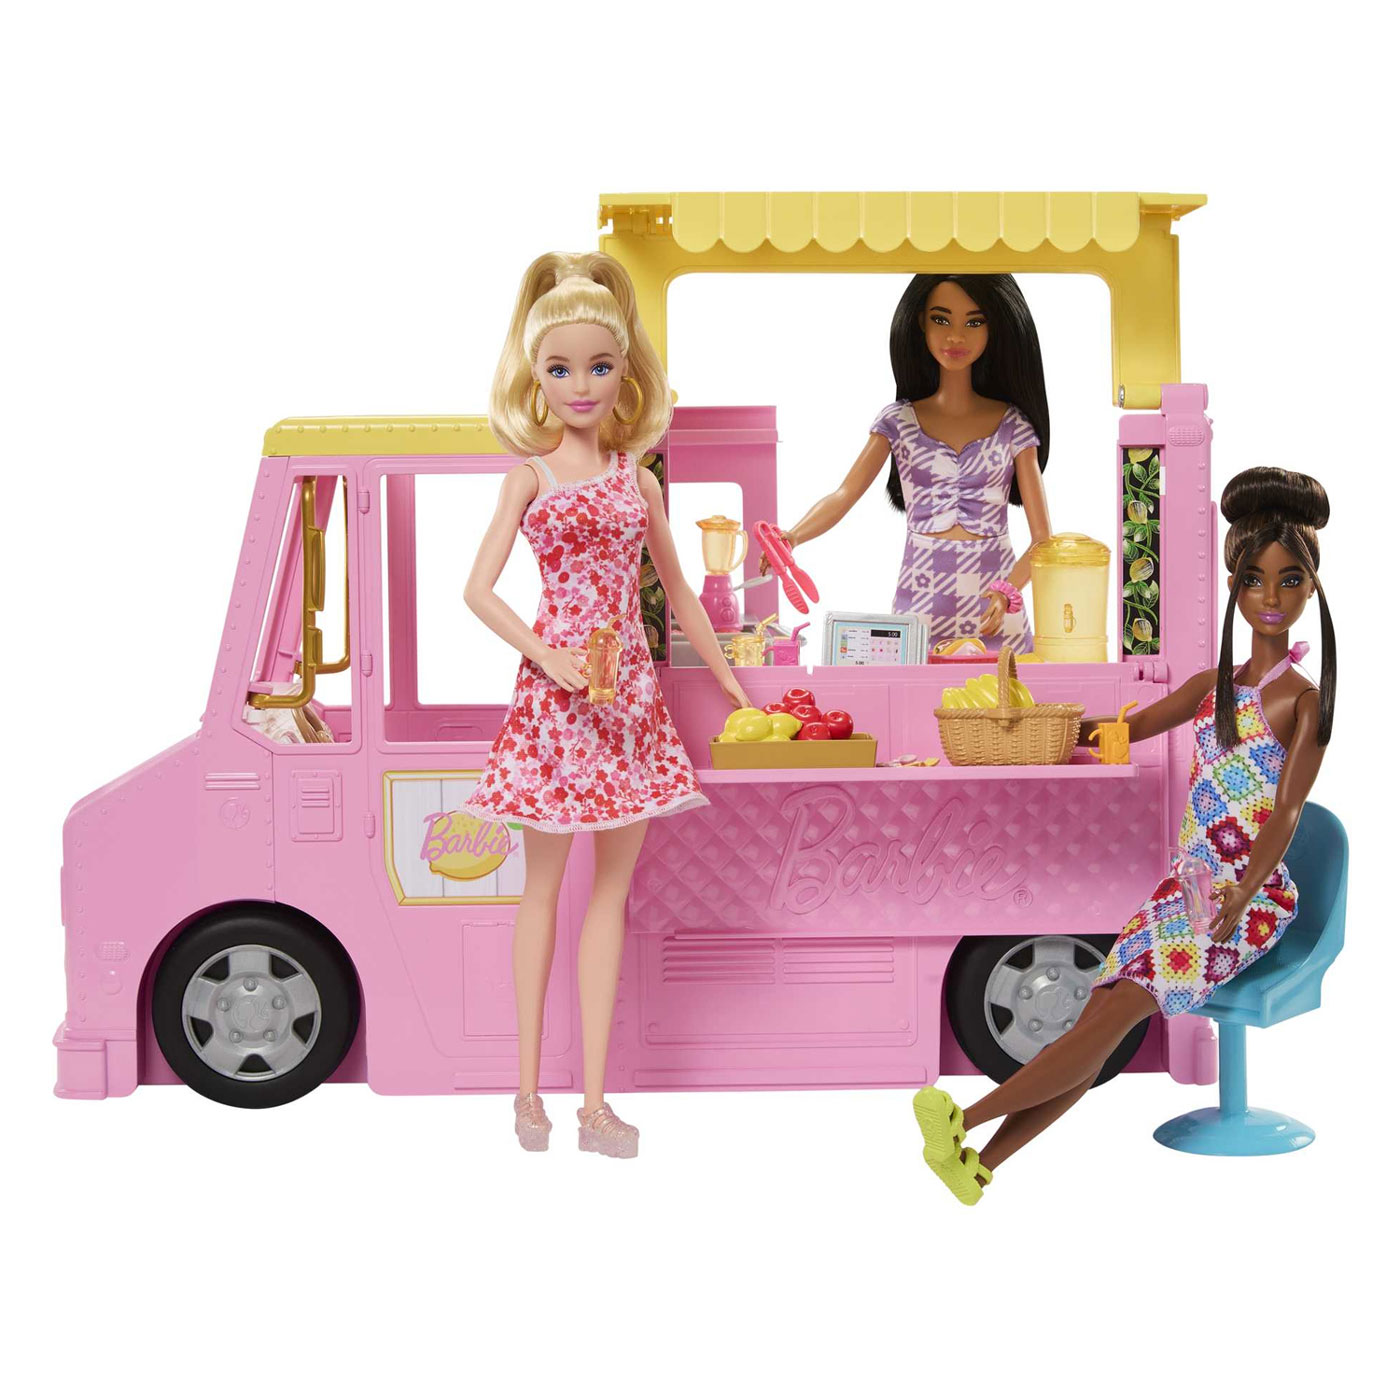 Barbie Limonadenwagen mit Pop